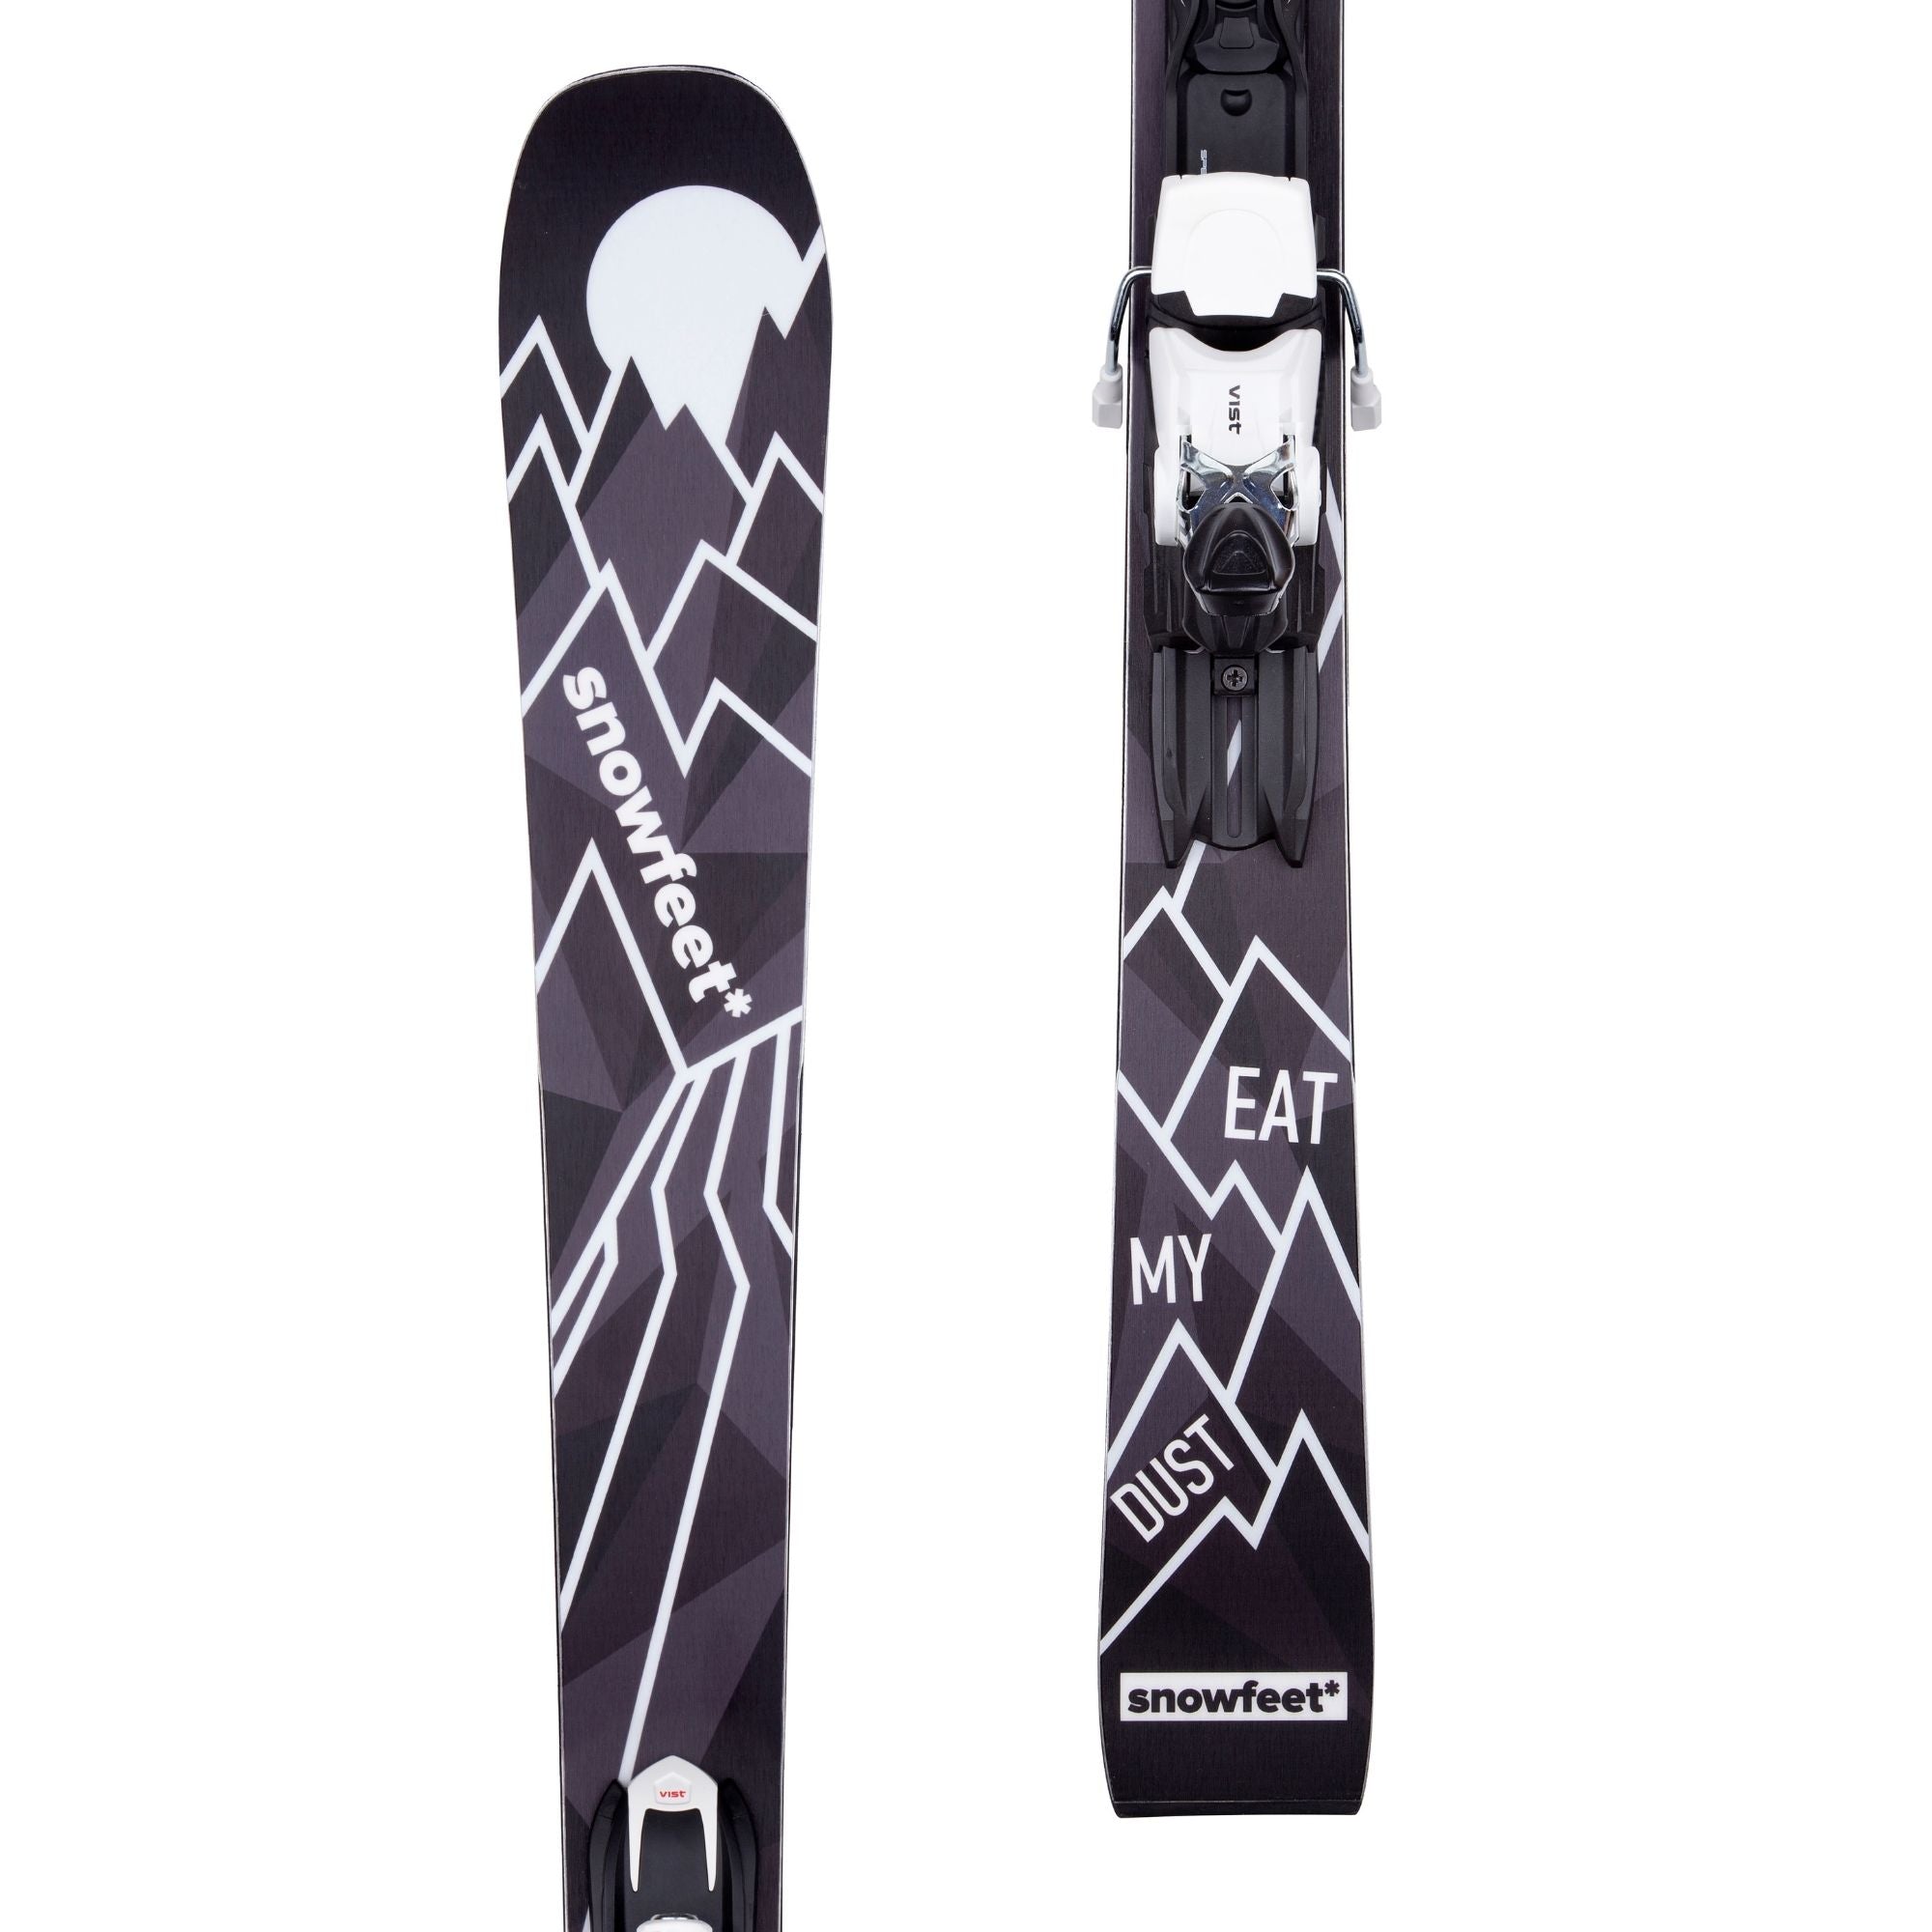 Snowfeet Skis 156 cm | Limited Edition